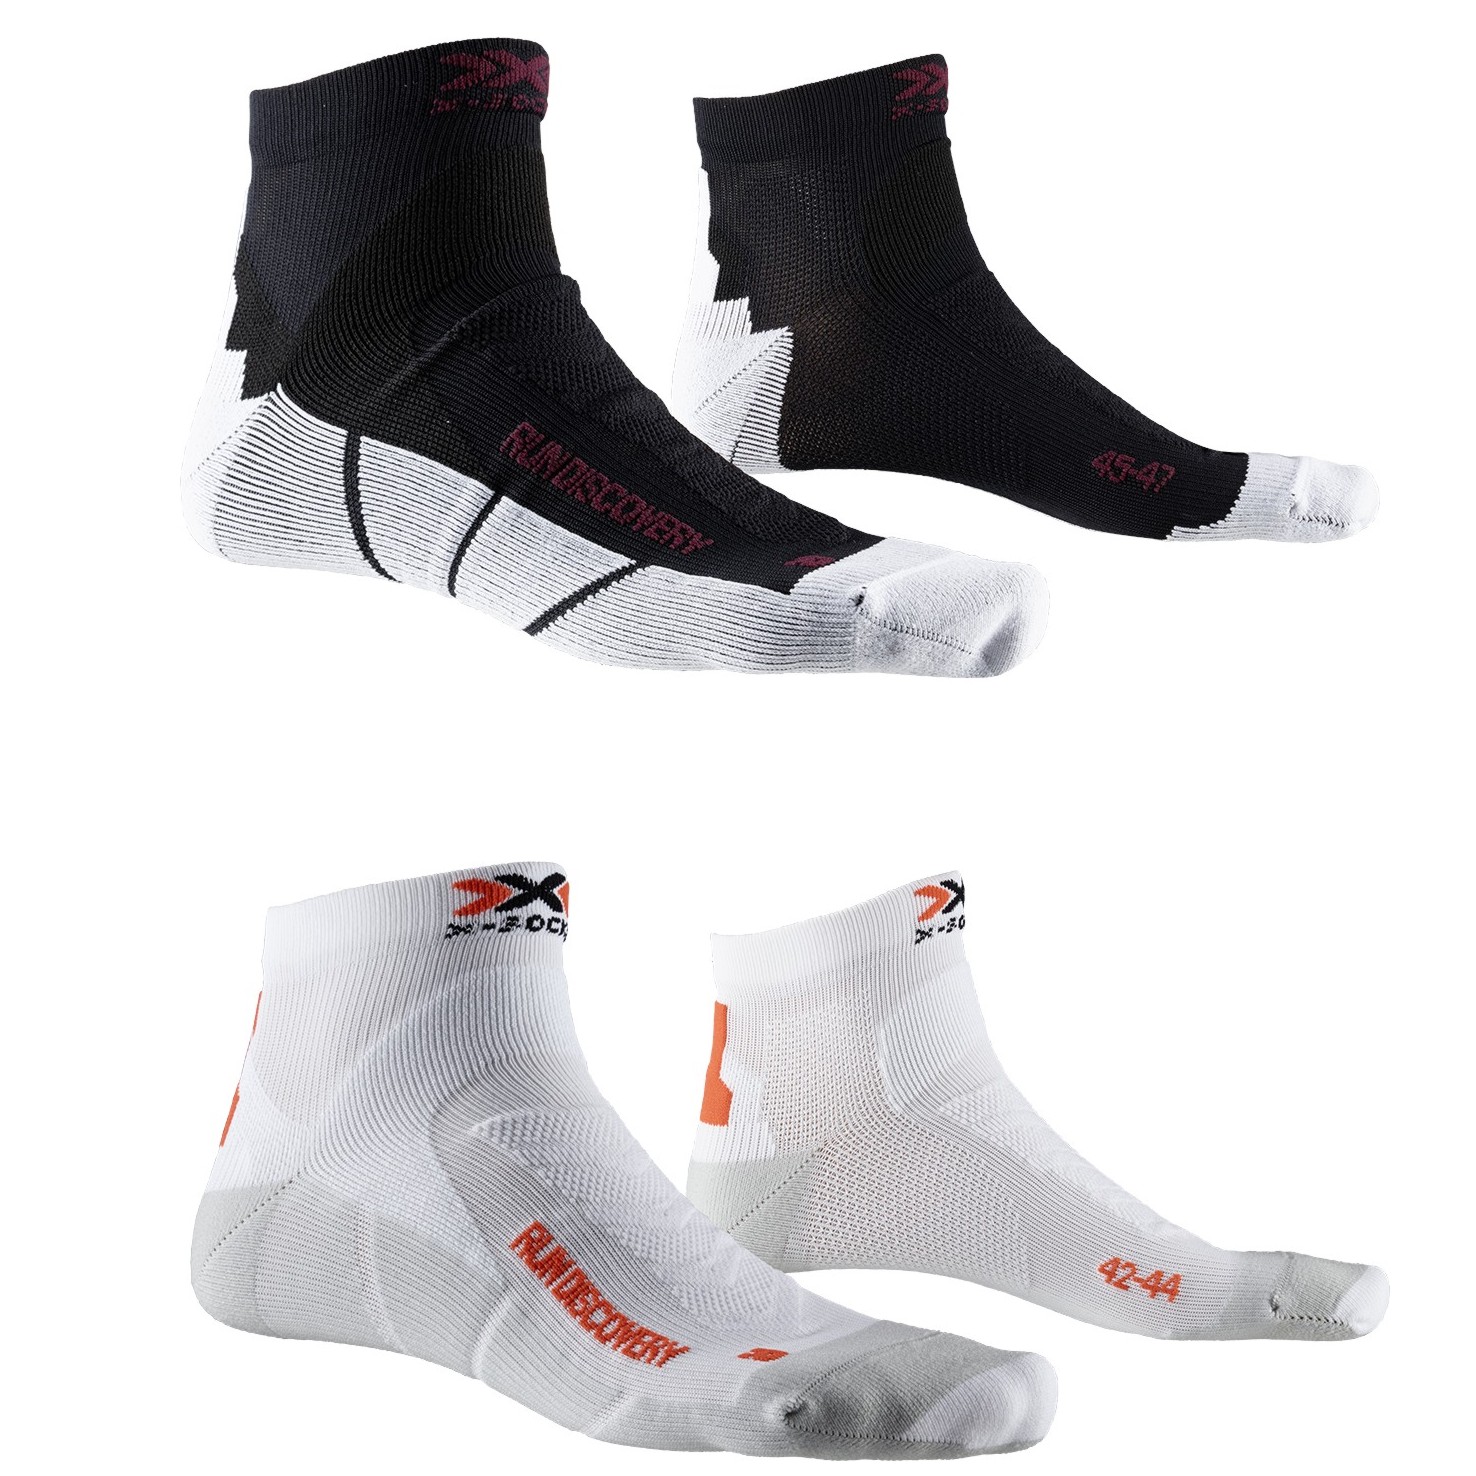 X-Socks RUN DISCOVERY 4.0 - Laufsocken für Herren - 2 Paar